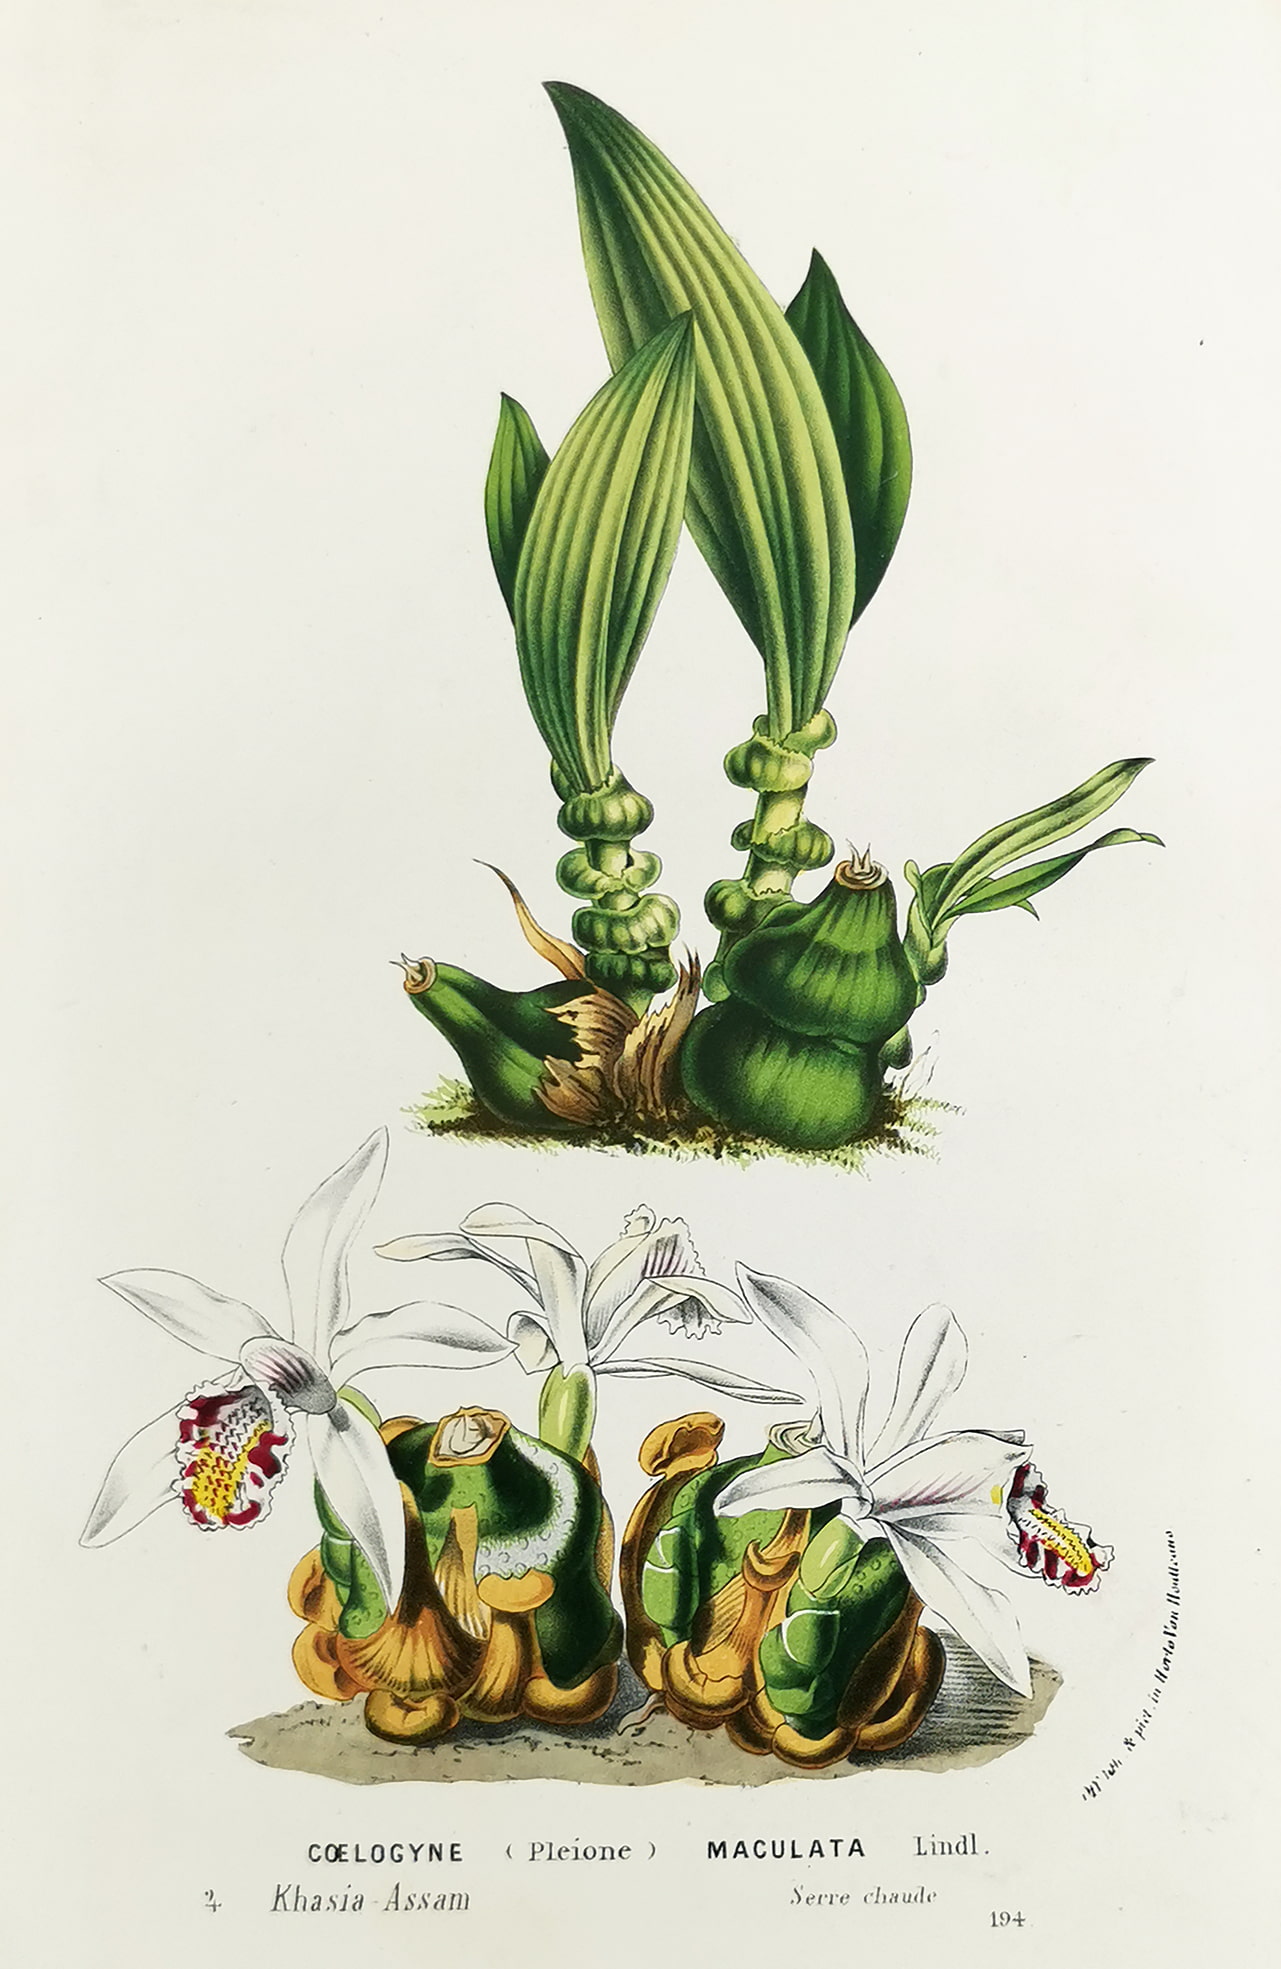 Coelogyne (Pleione) Maculata Lindl. - Antique Print from 1845